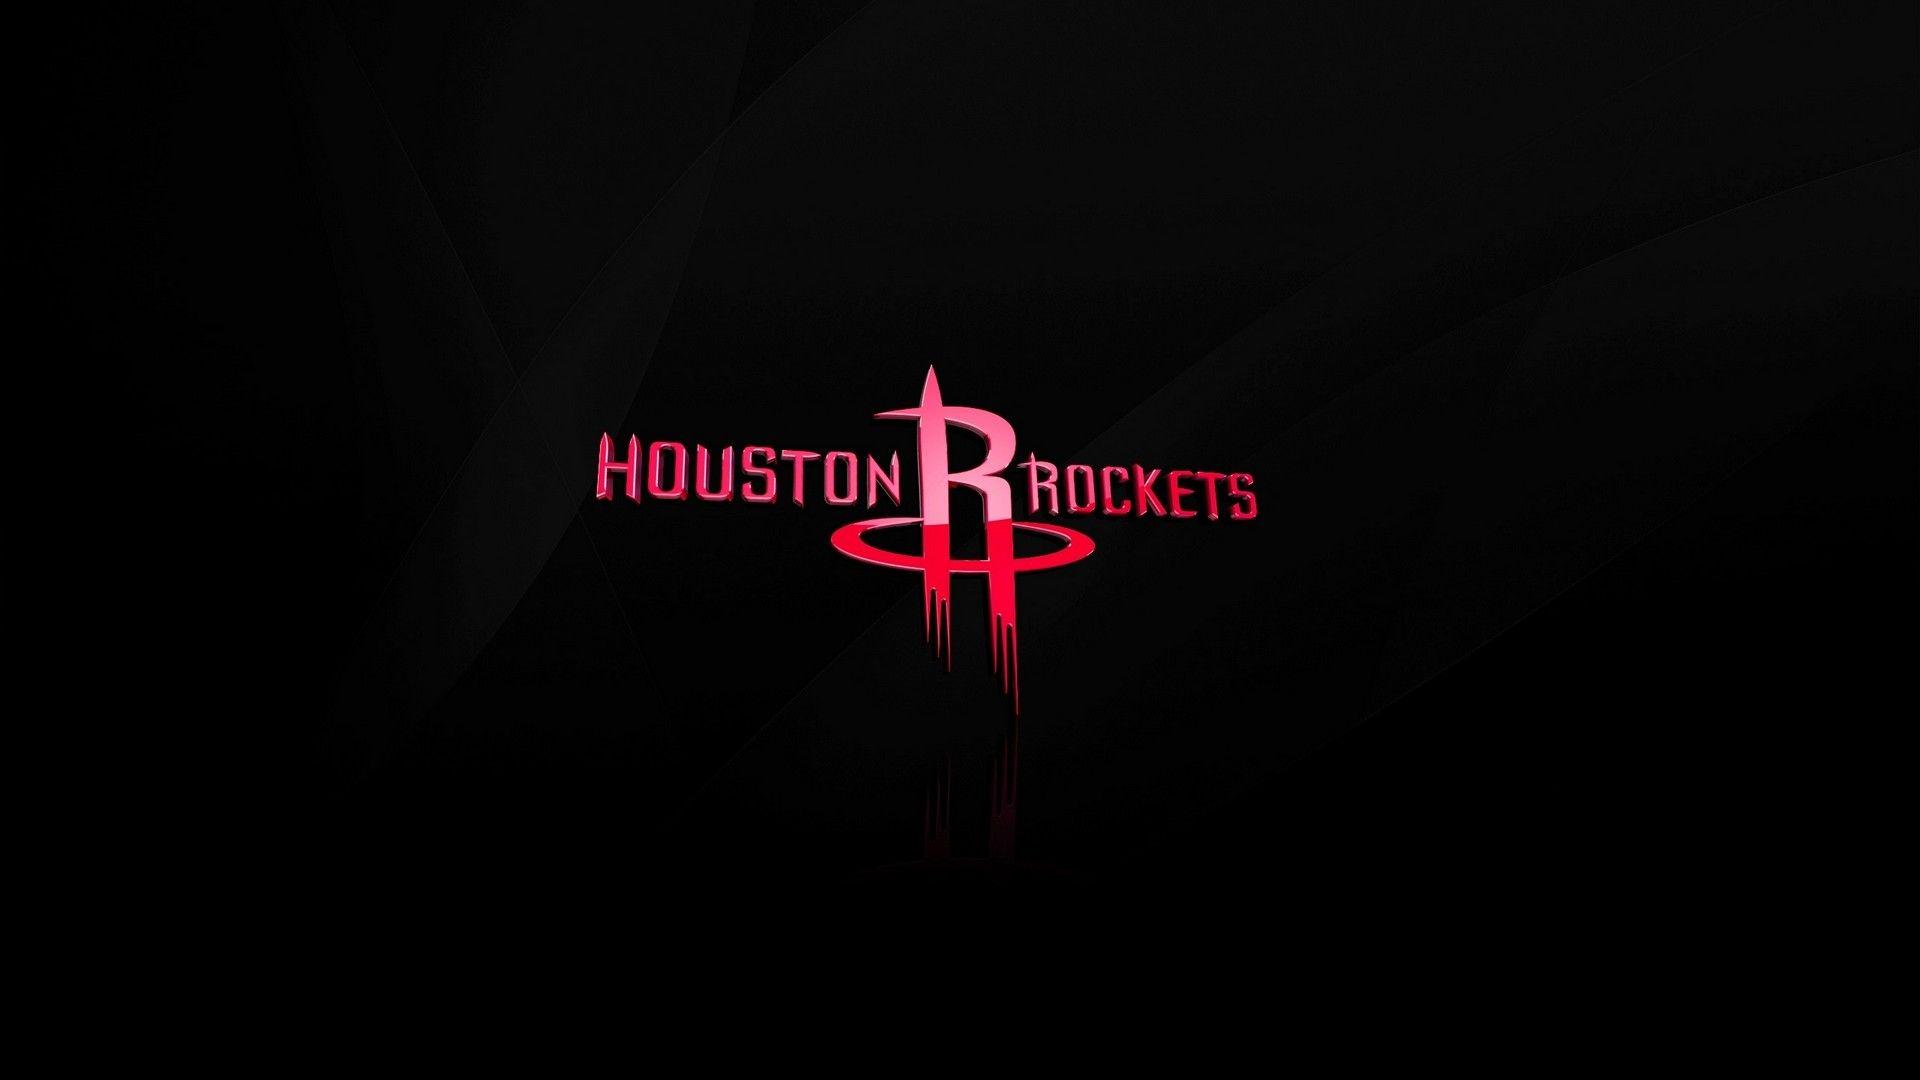 Houston Rockets Wallpaper HD Basketball Wallpaper. Houston rockets, Rockets logo, Basketball wallpaper